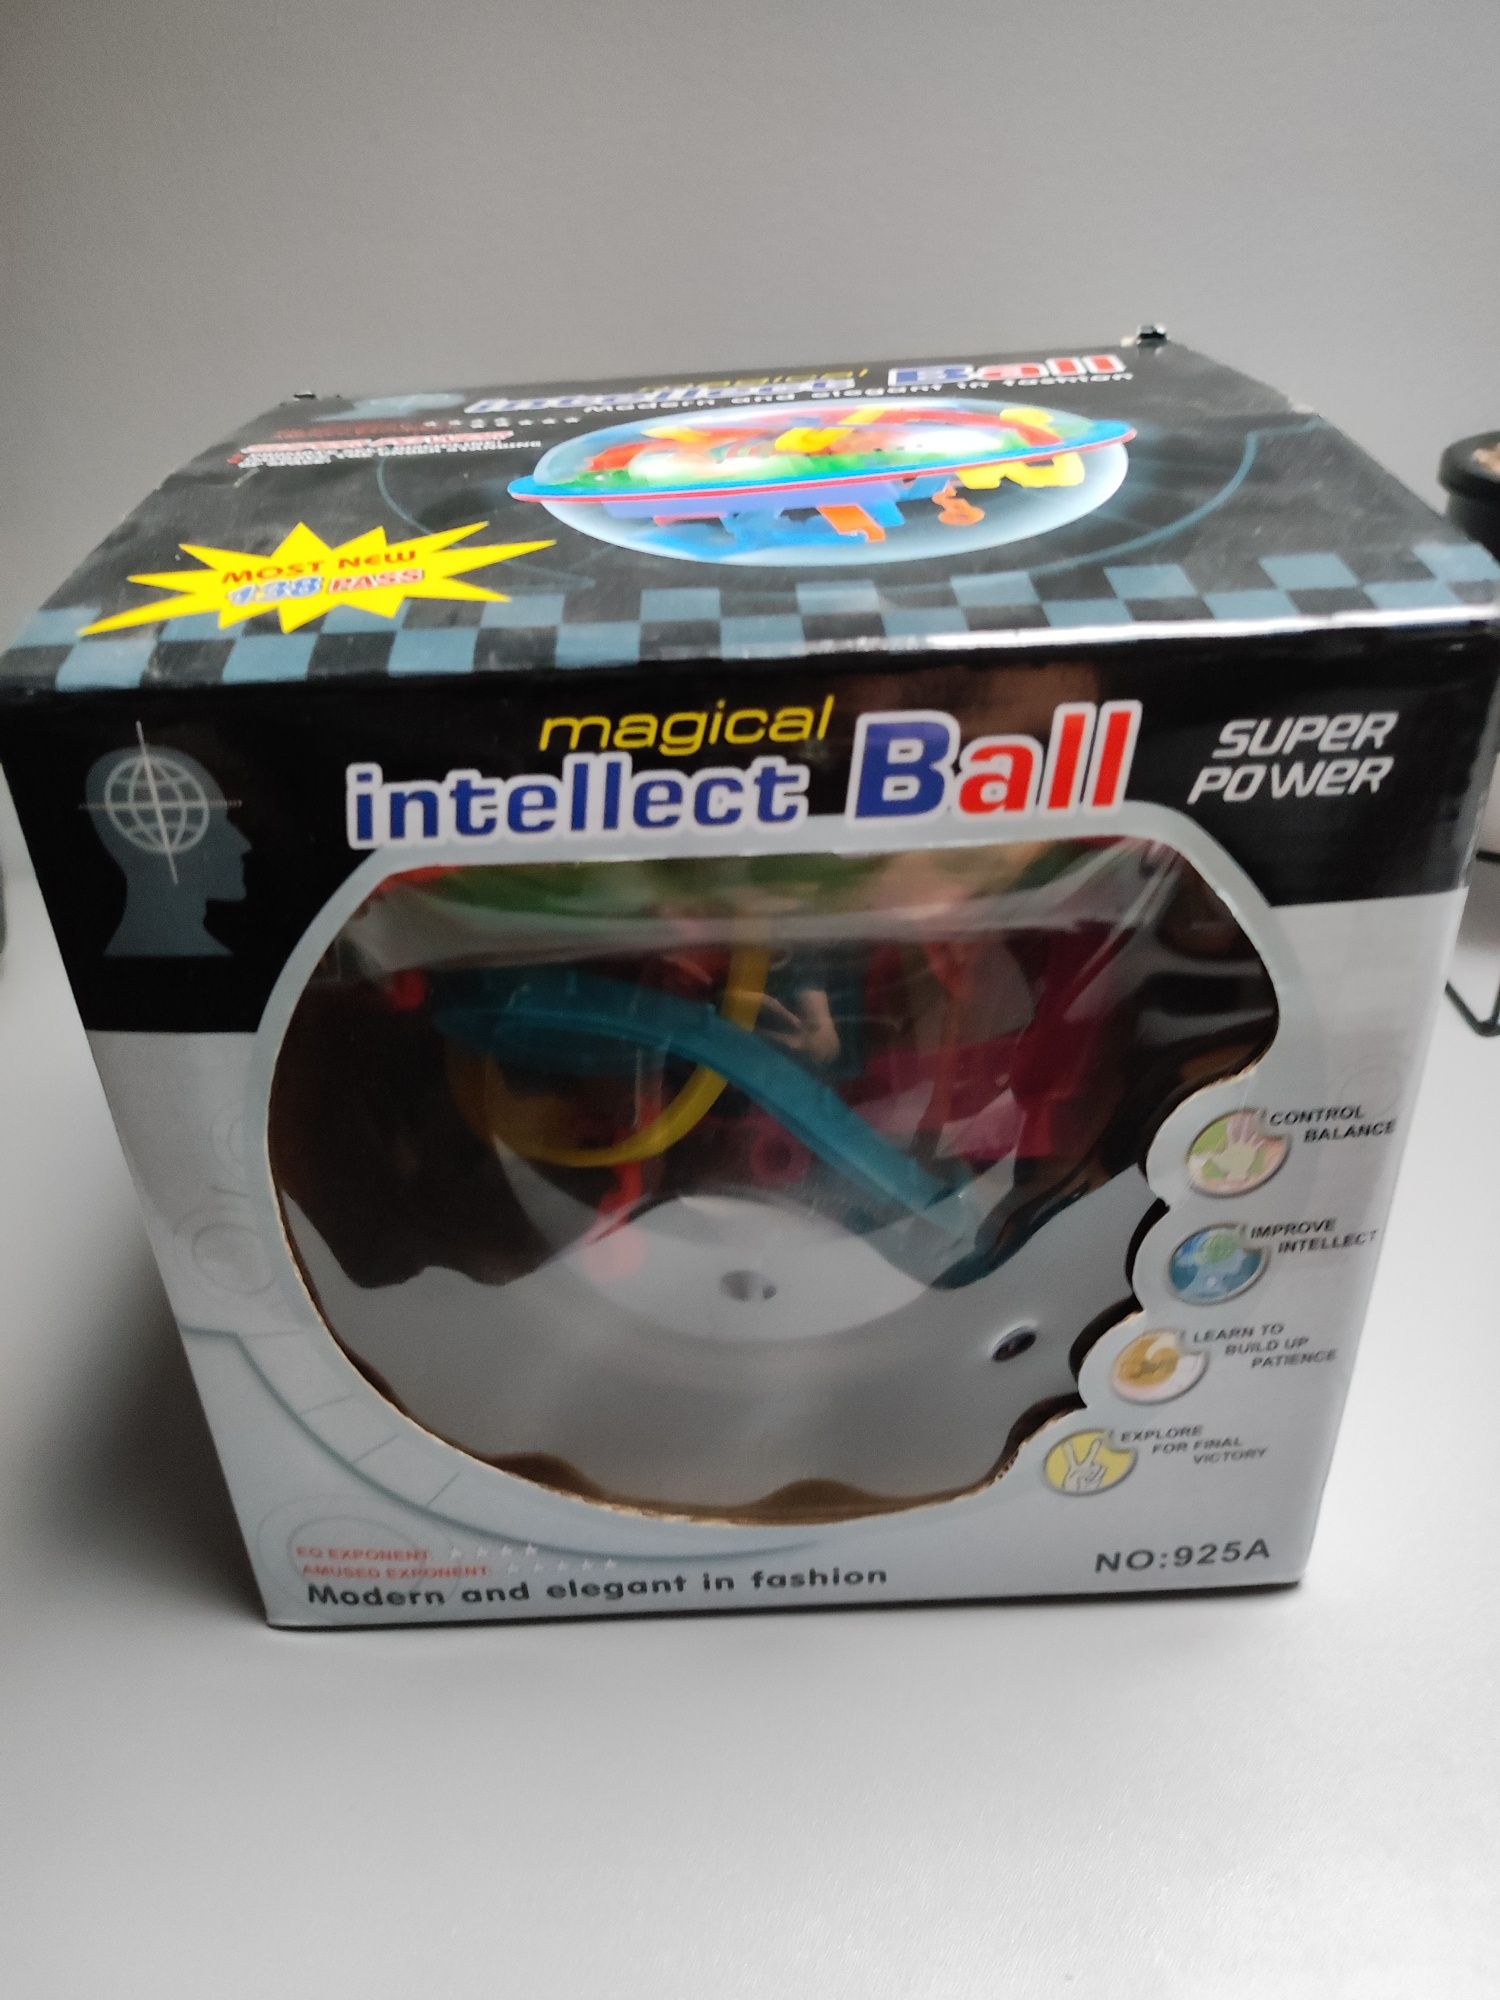 Zabawka magical intelect ball